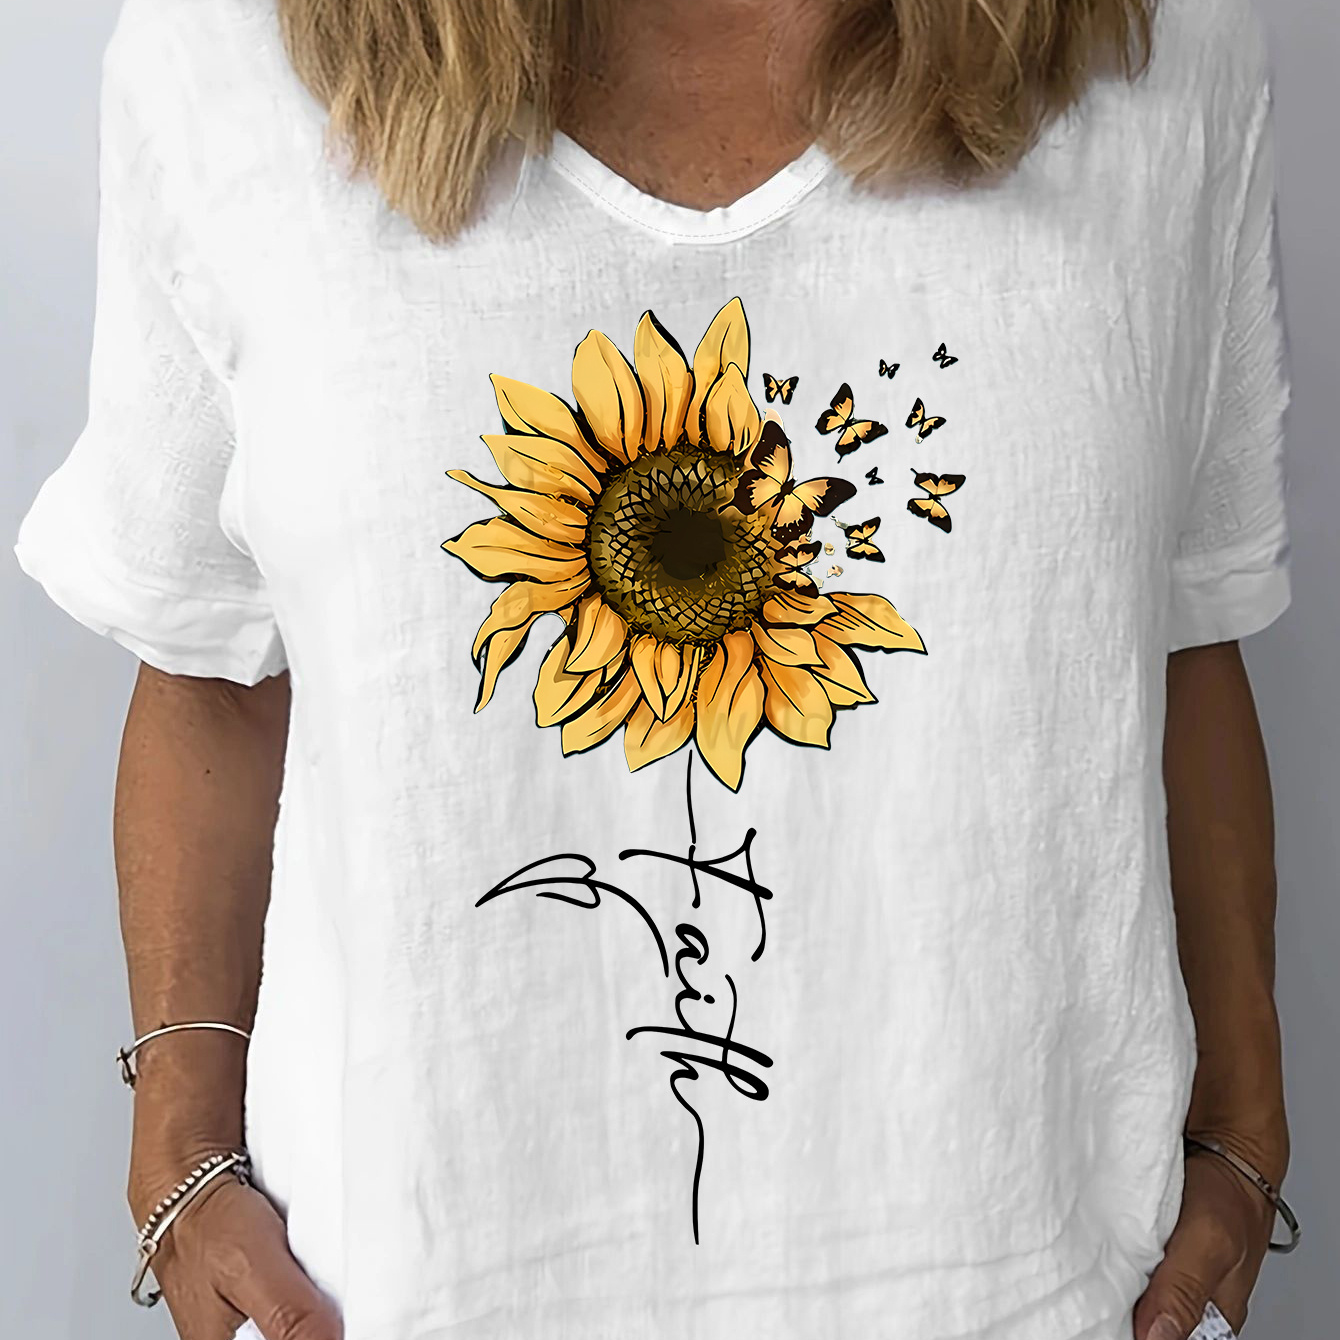 

Sunflower Print T-shirt, Short Sleeve V Neck Casual Top For Summer & Spring, Women's Clothing